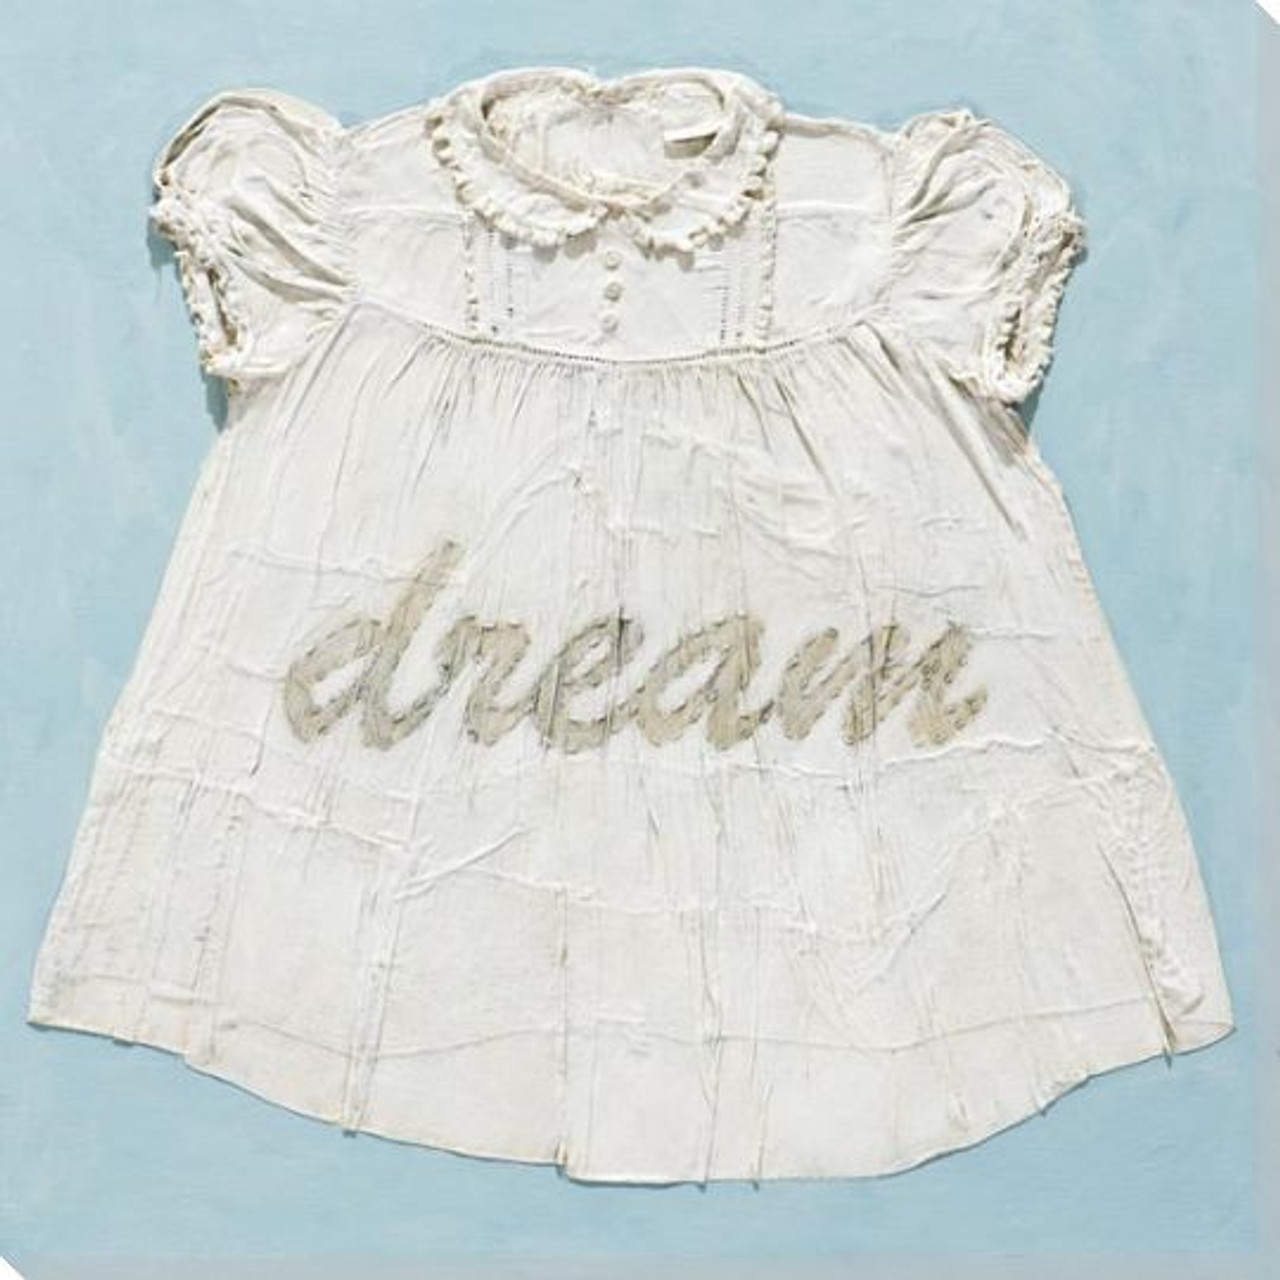 Dream Dress Wrapped Canvas Giclee Print Wall Art - Wall Decor